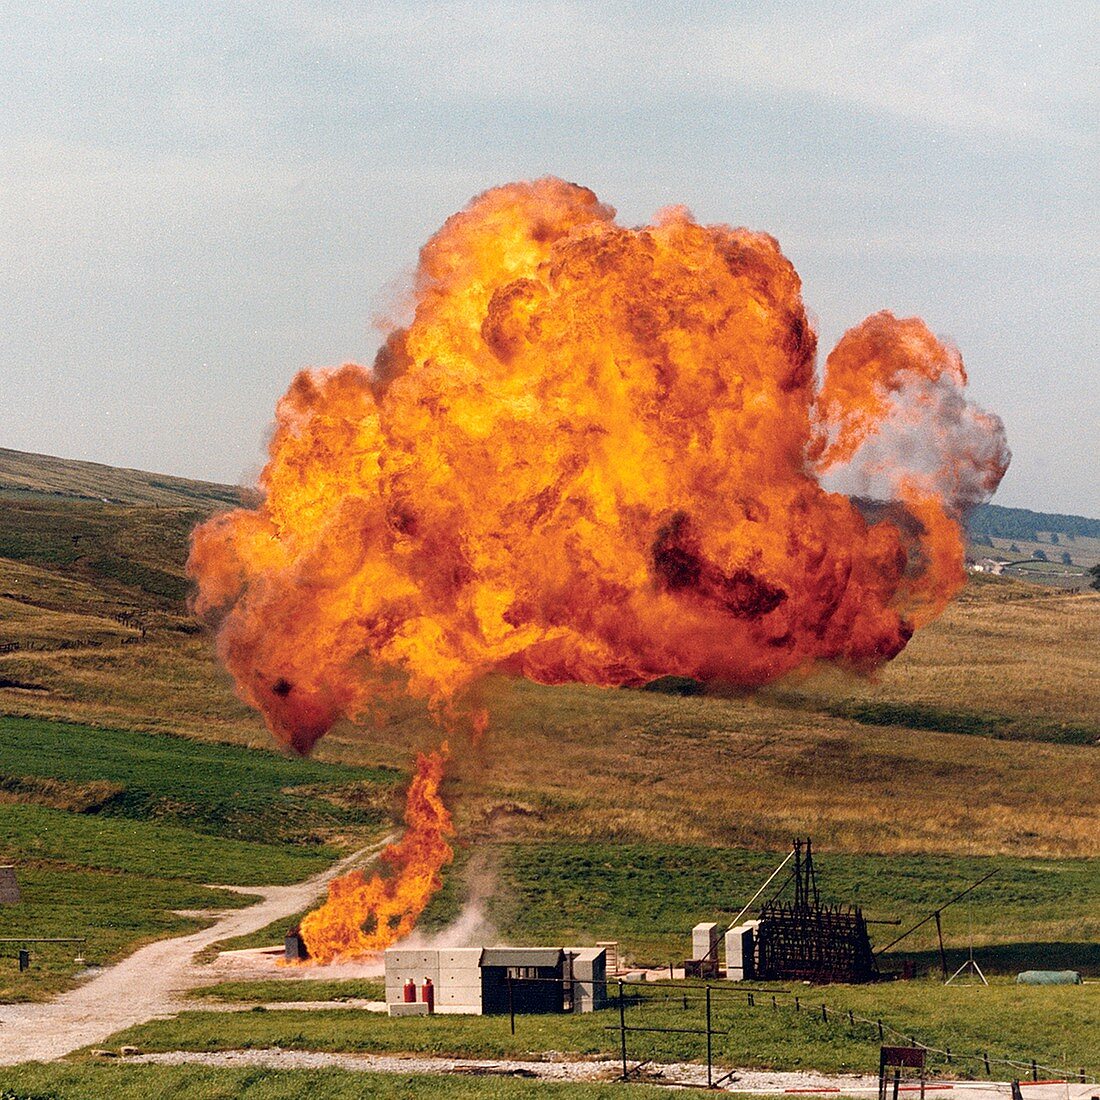 Liquid petroleum gas tank failure testing